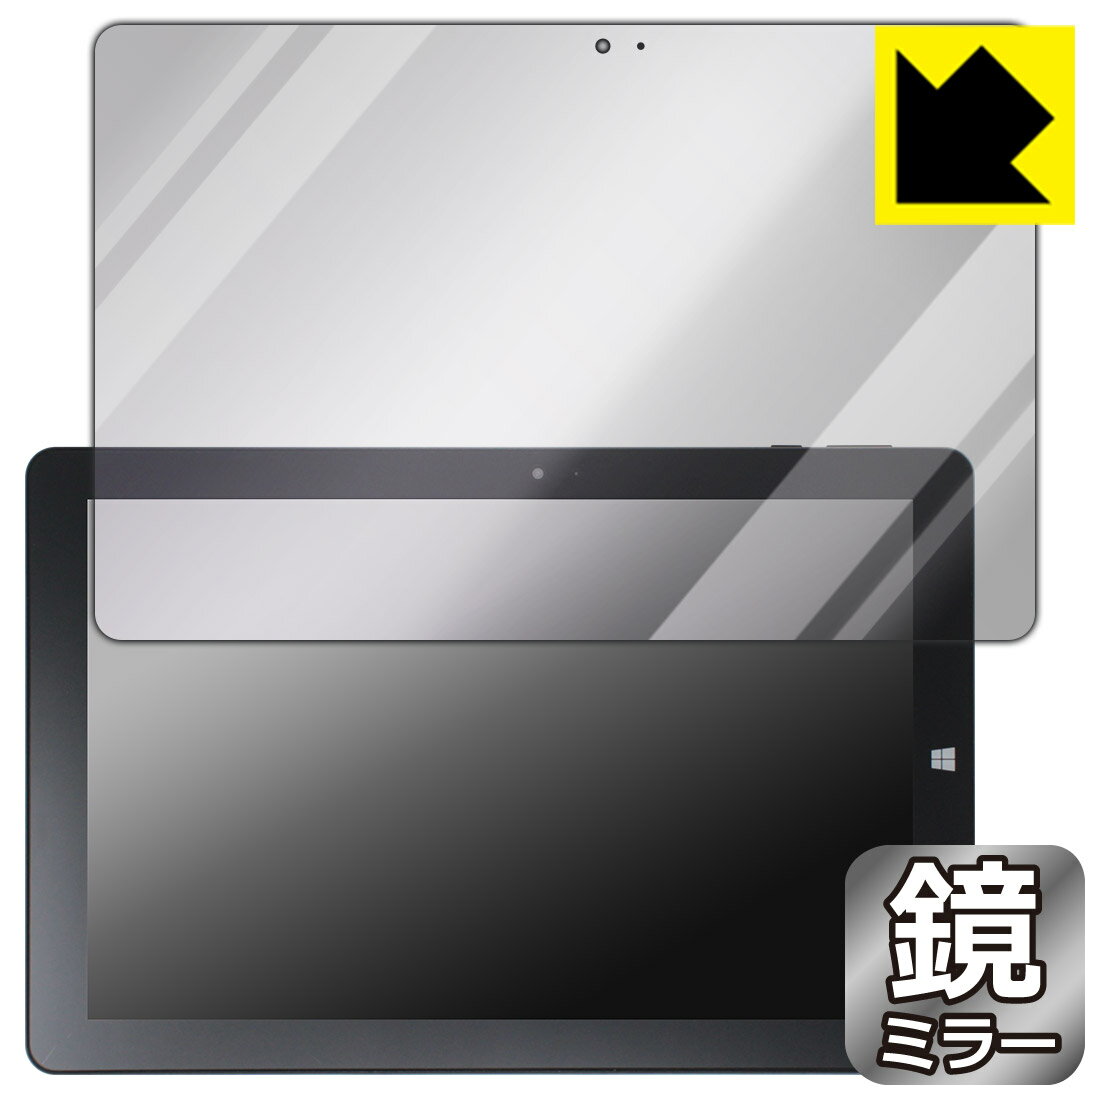 Mirror Shield 保護フィルム GM-JAPAN 10.1型 2in1 タブレットノートパソコン GLM-10-128 日本製 自社製造直販